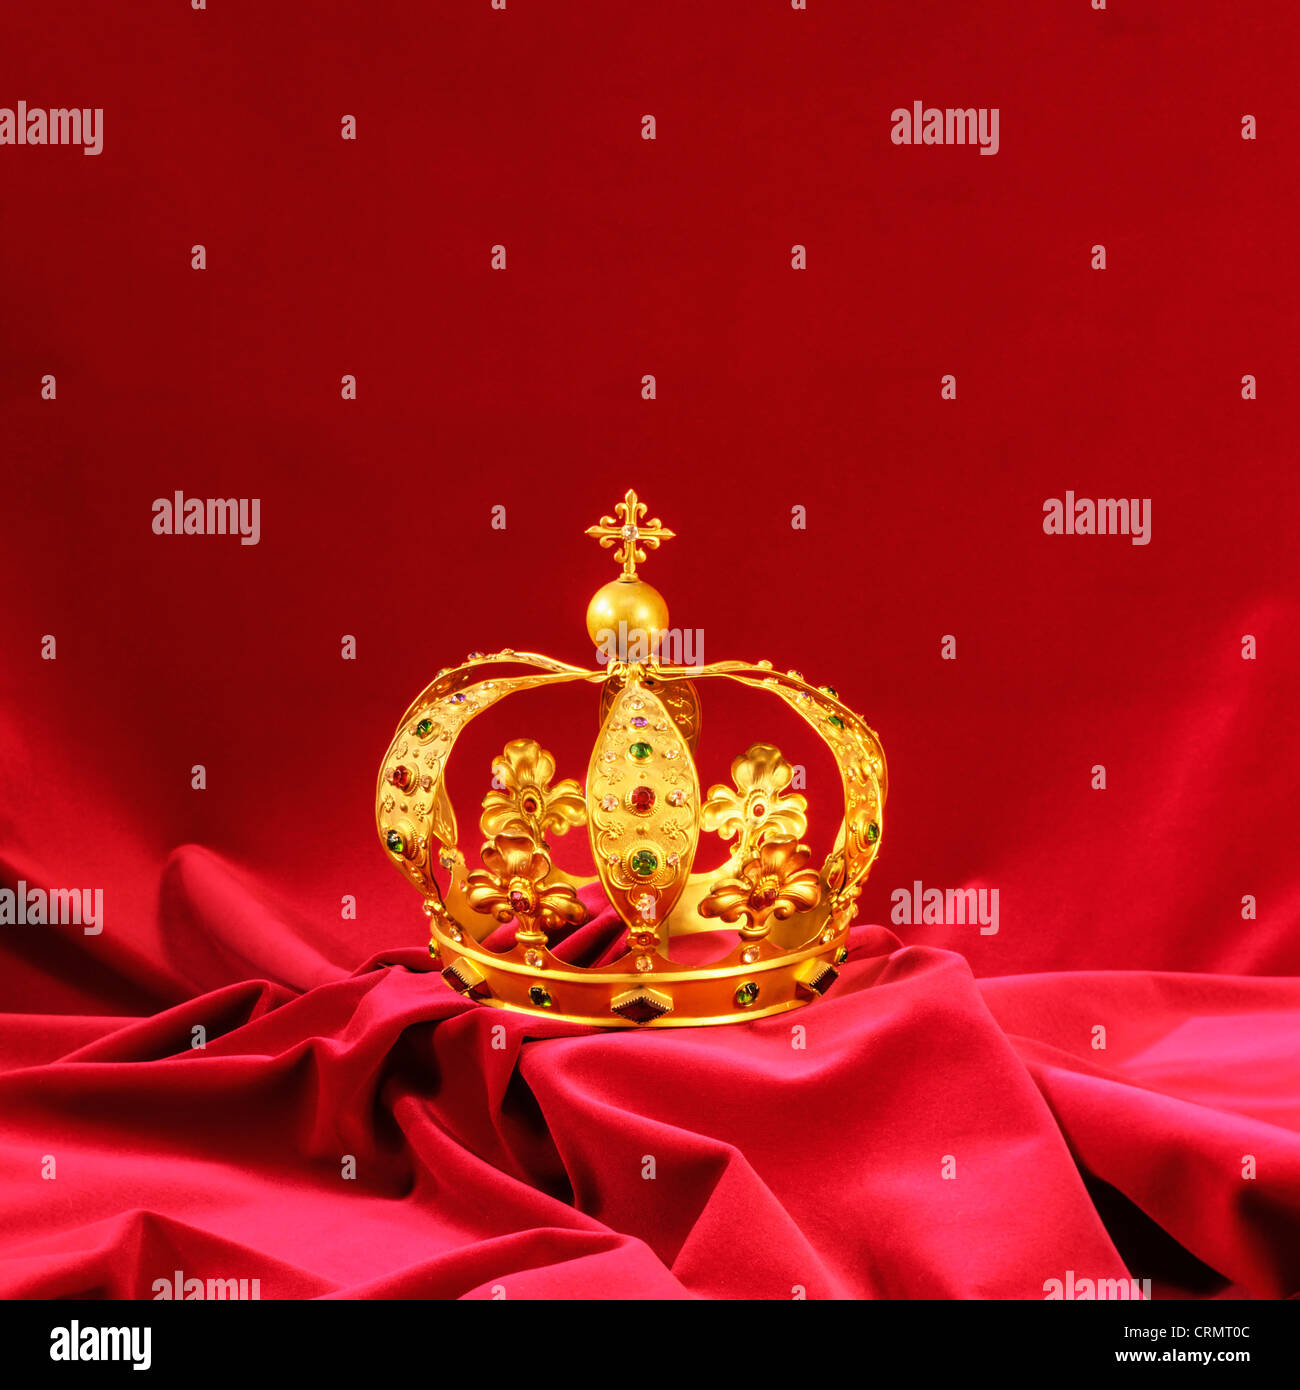 Golden crown with diamonds and jewels on garnet velvet Stock Photo